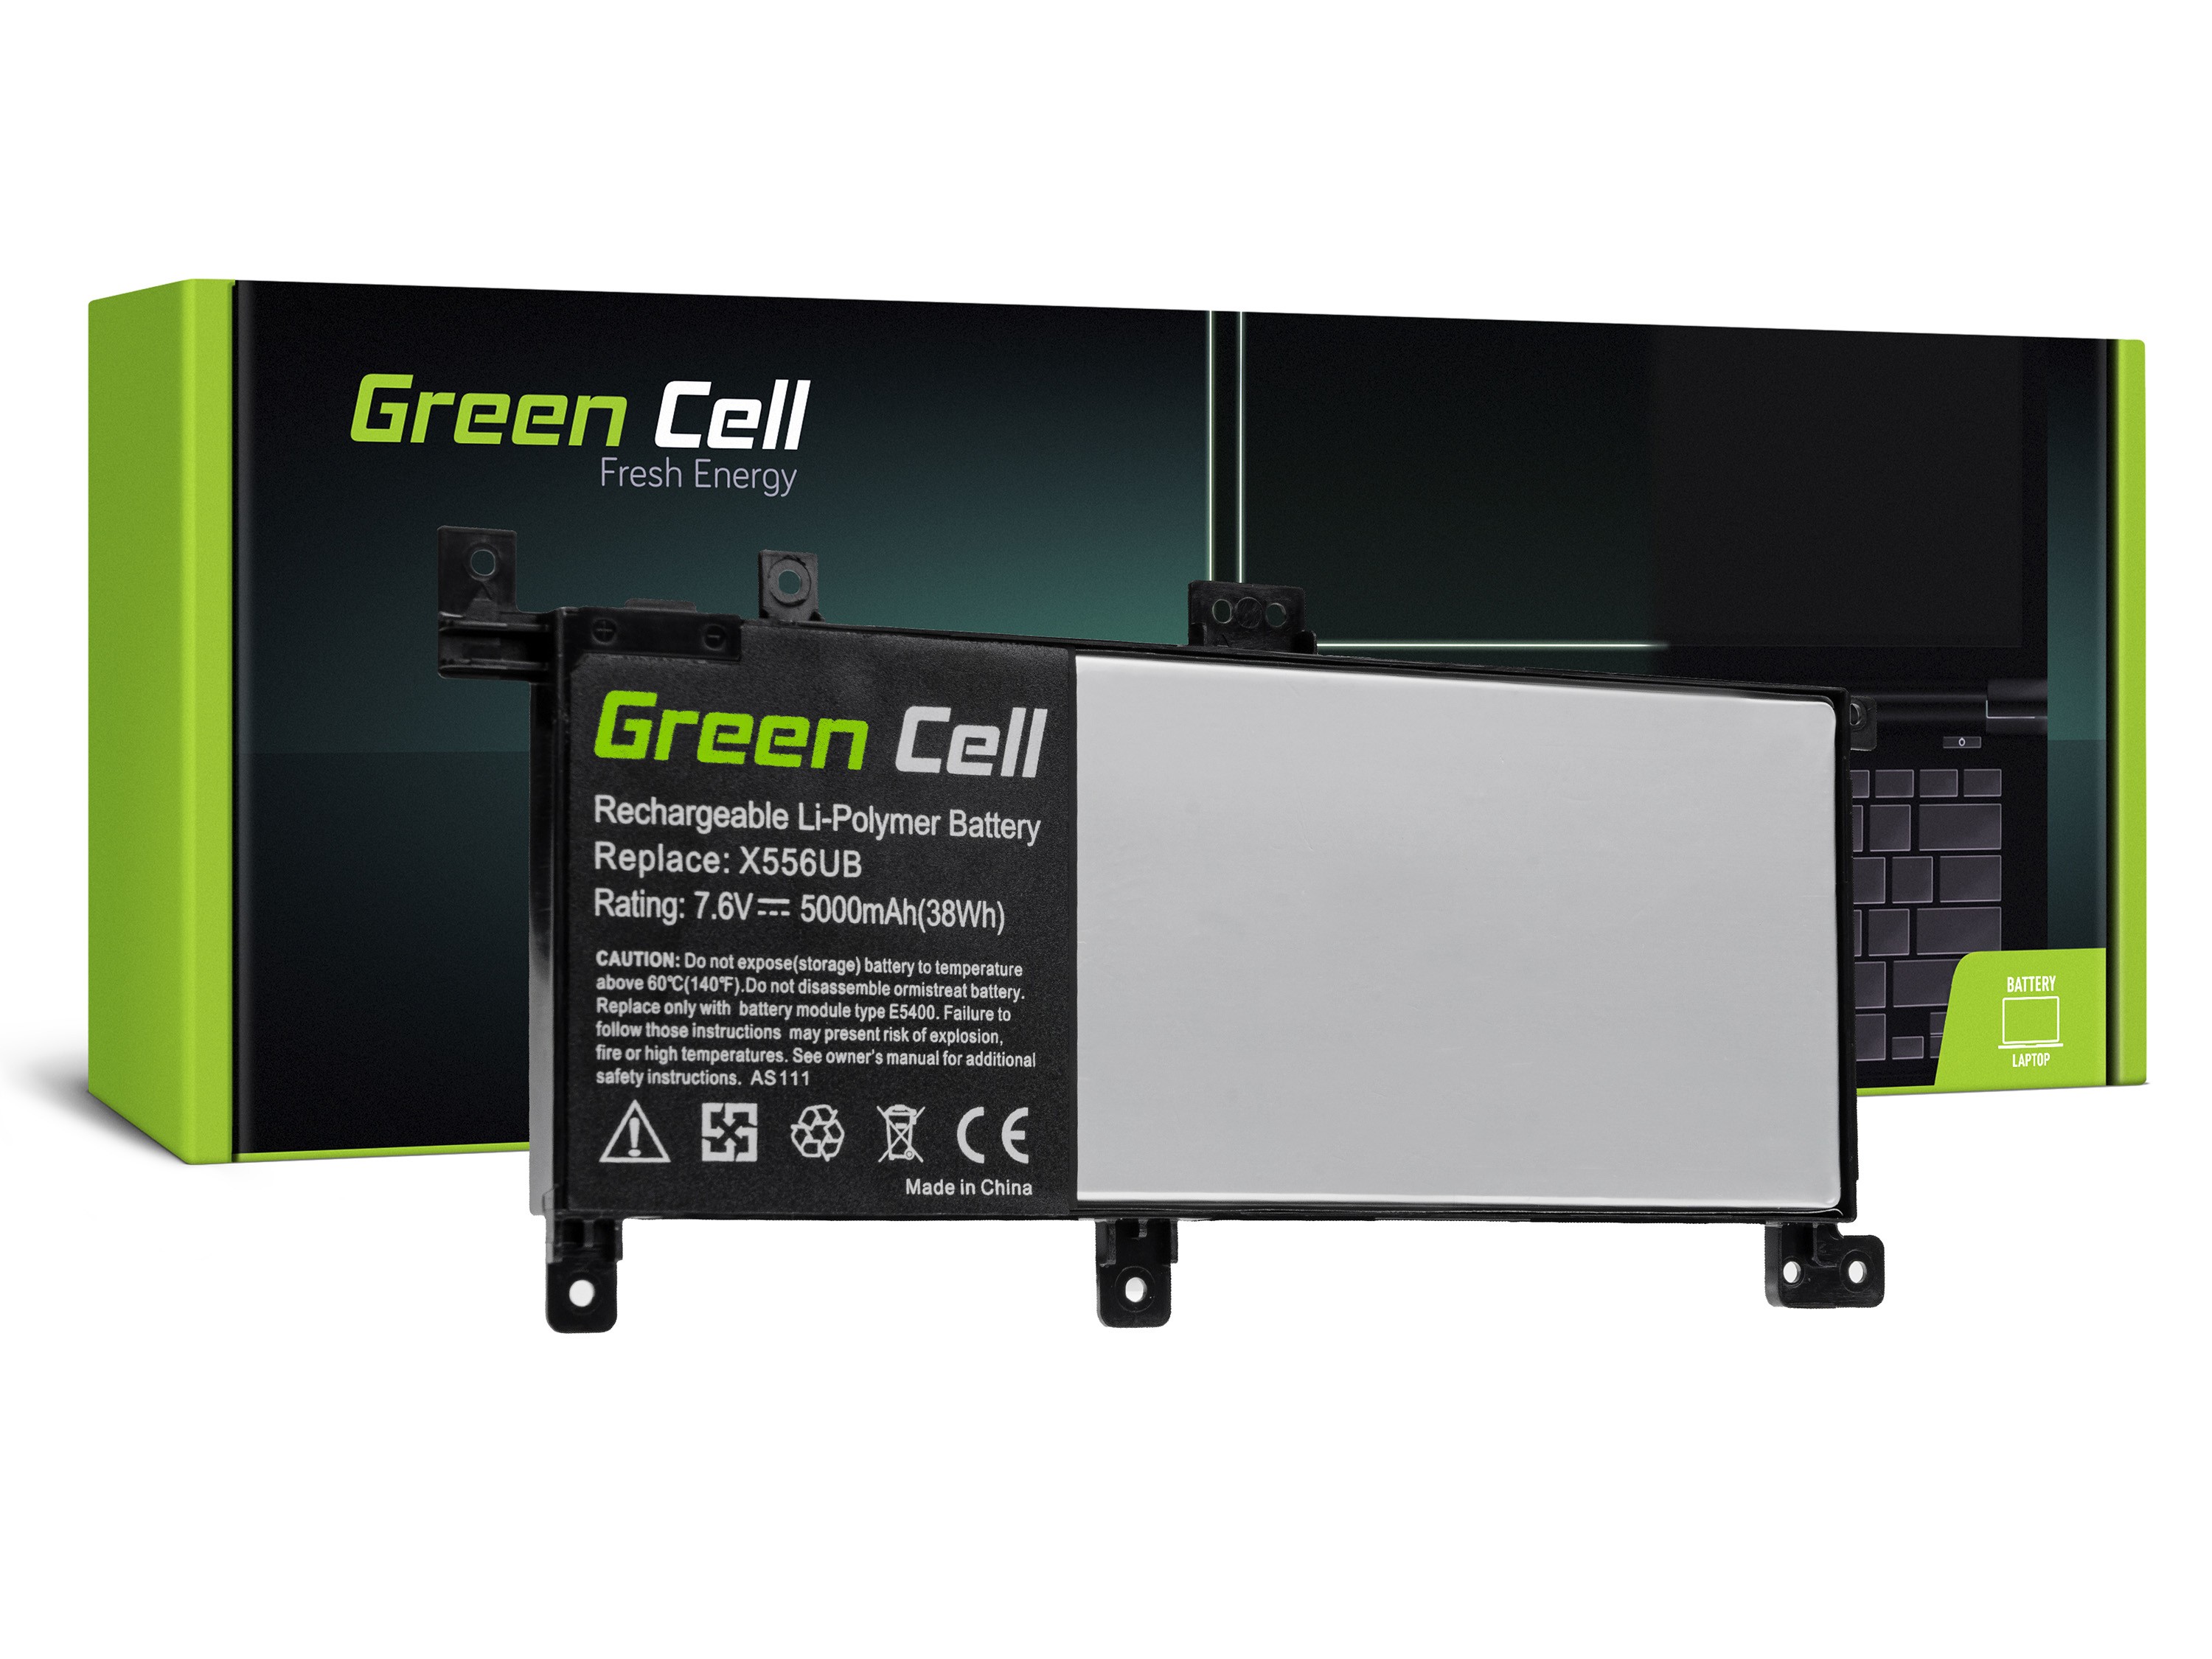 Green Cell Laptop akkumulátor C21N1509 Asus X556U X556UA X556UB X556UF X556UJ X556UQ X556UR X556UV